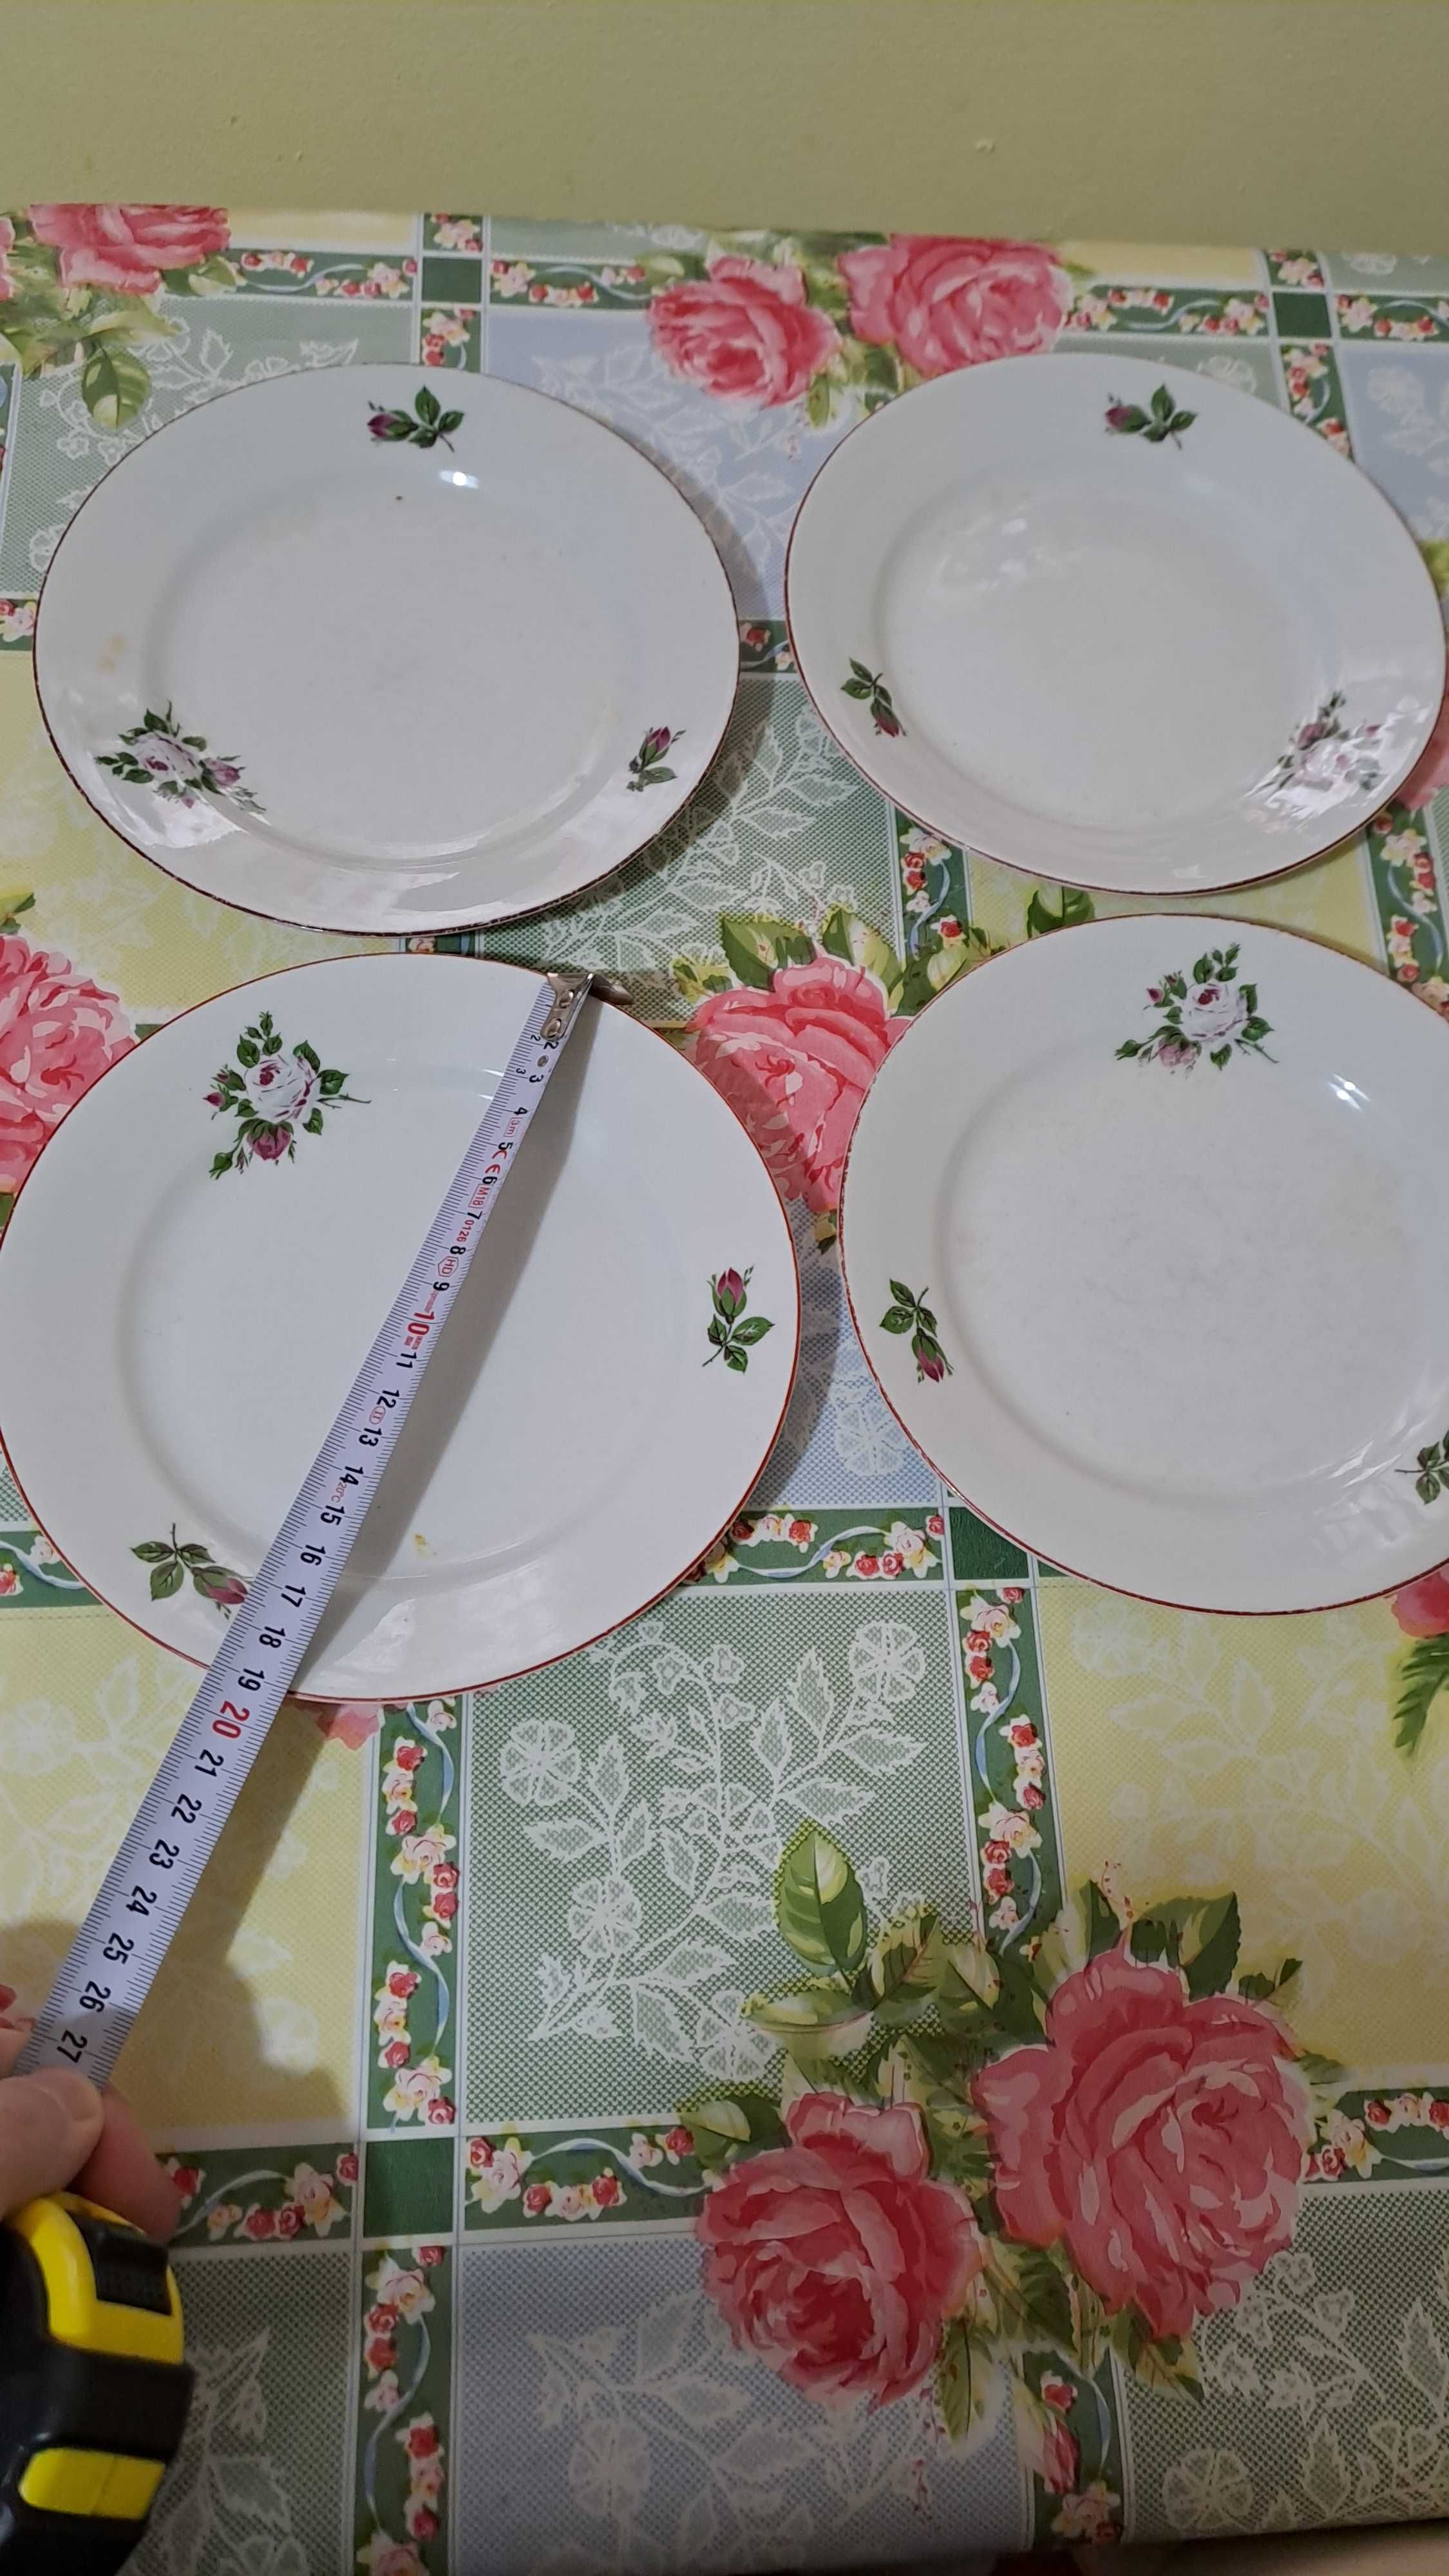 Български порцеланови чинии